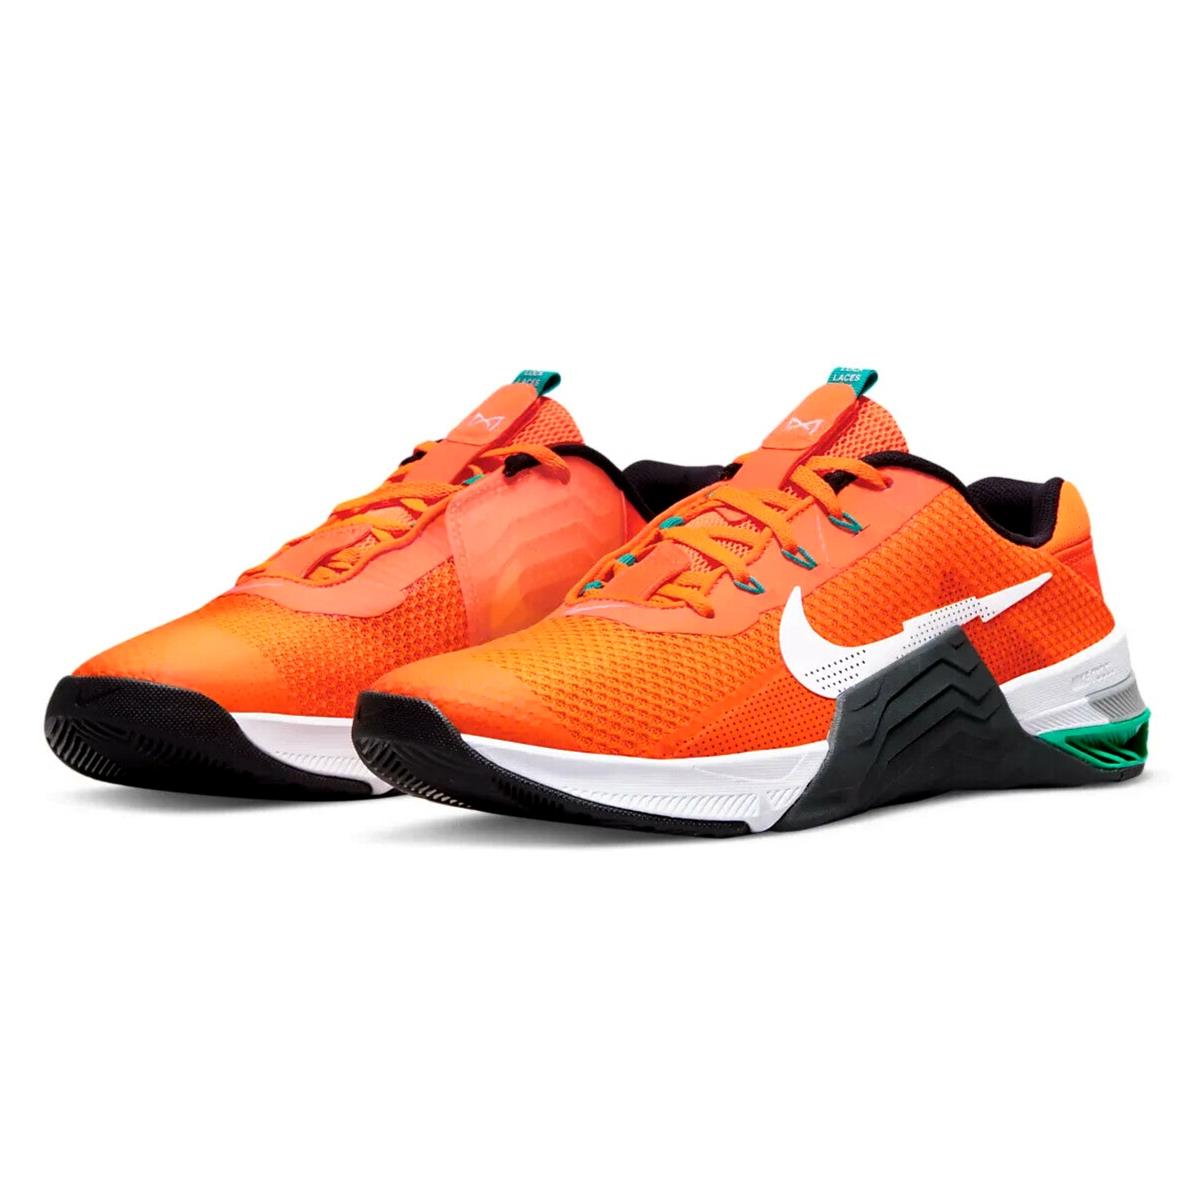 Nike nike metcon sneakers Metcon 7 Mens Size 10 Sneaker Shoes CZ8281 883 Orange Black Grey